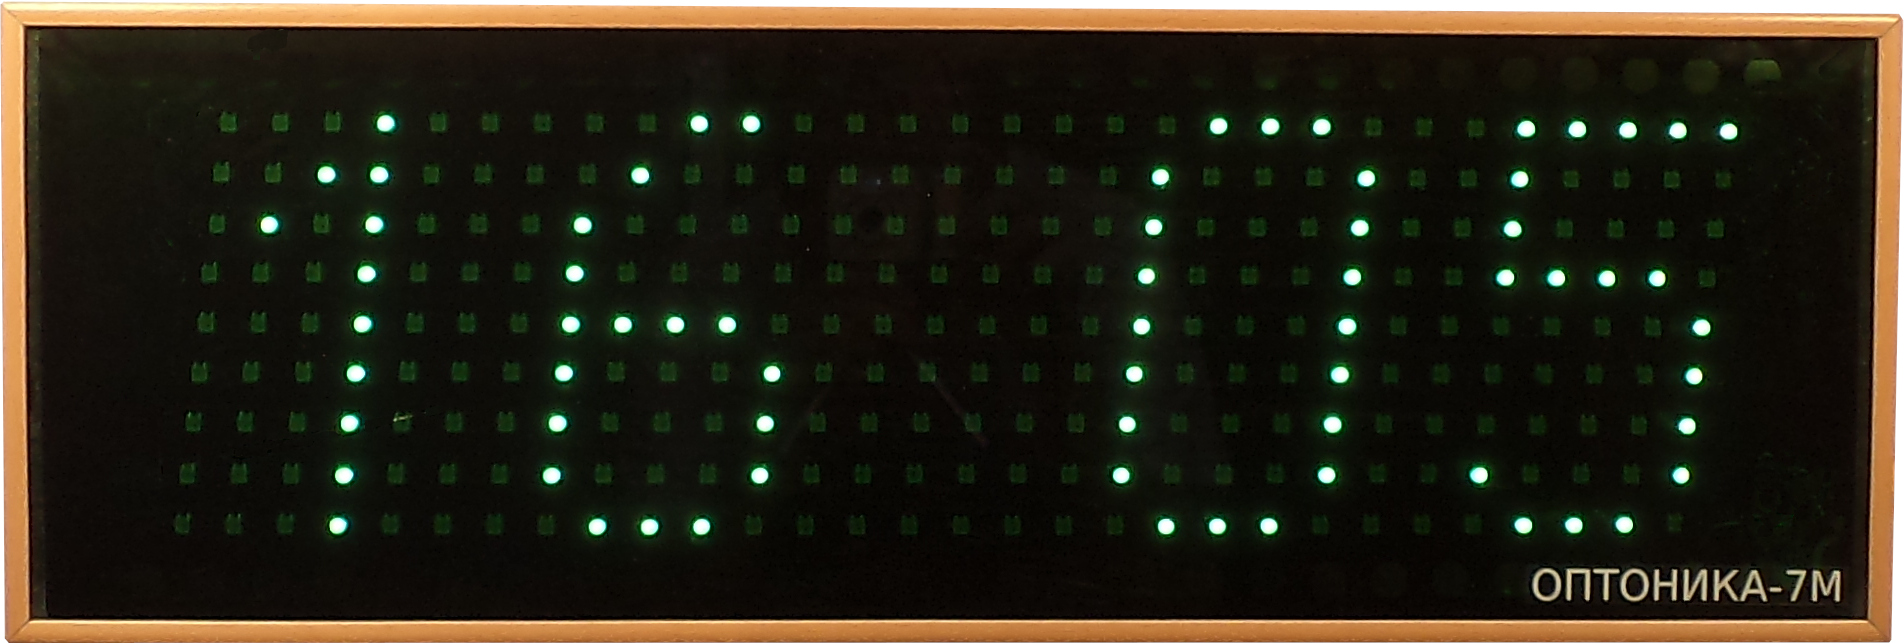 Optonika-7M LED clock